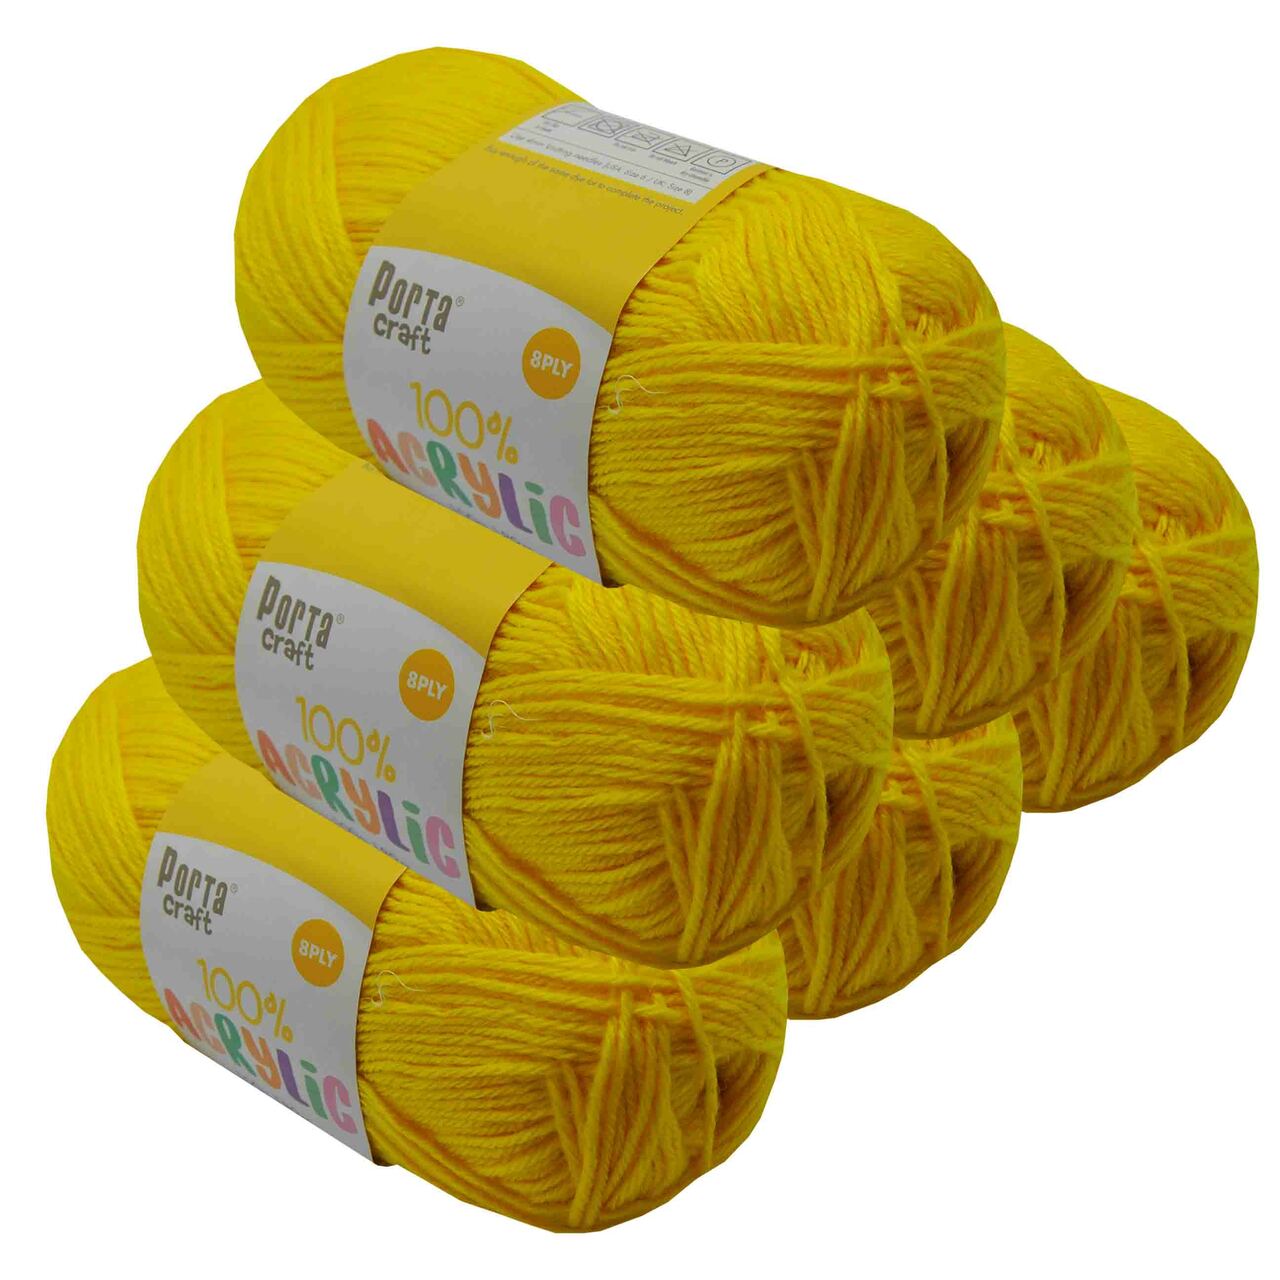 Acrylic Yarn 100g 189m 8ply - Sunshine - Discount Craft